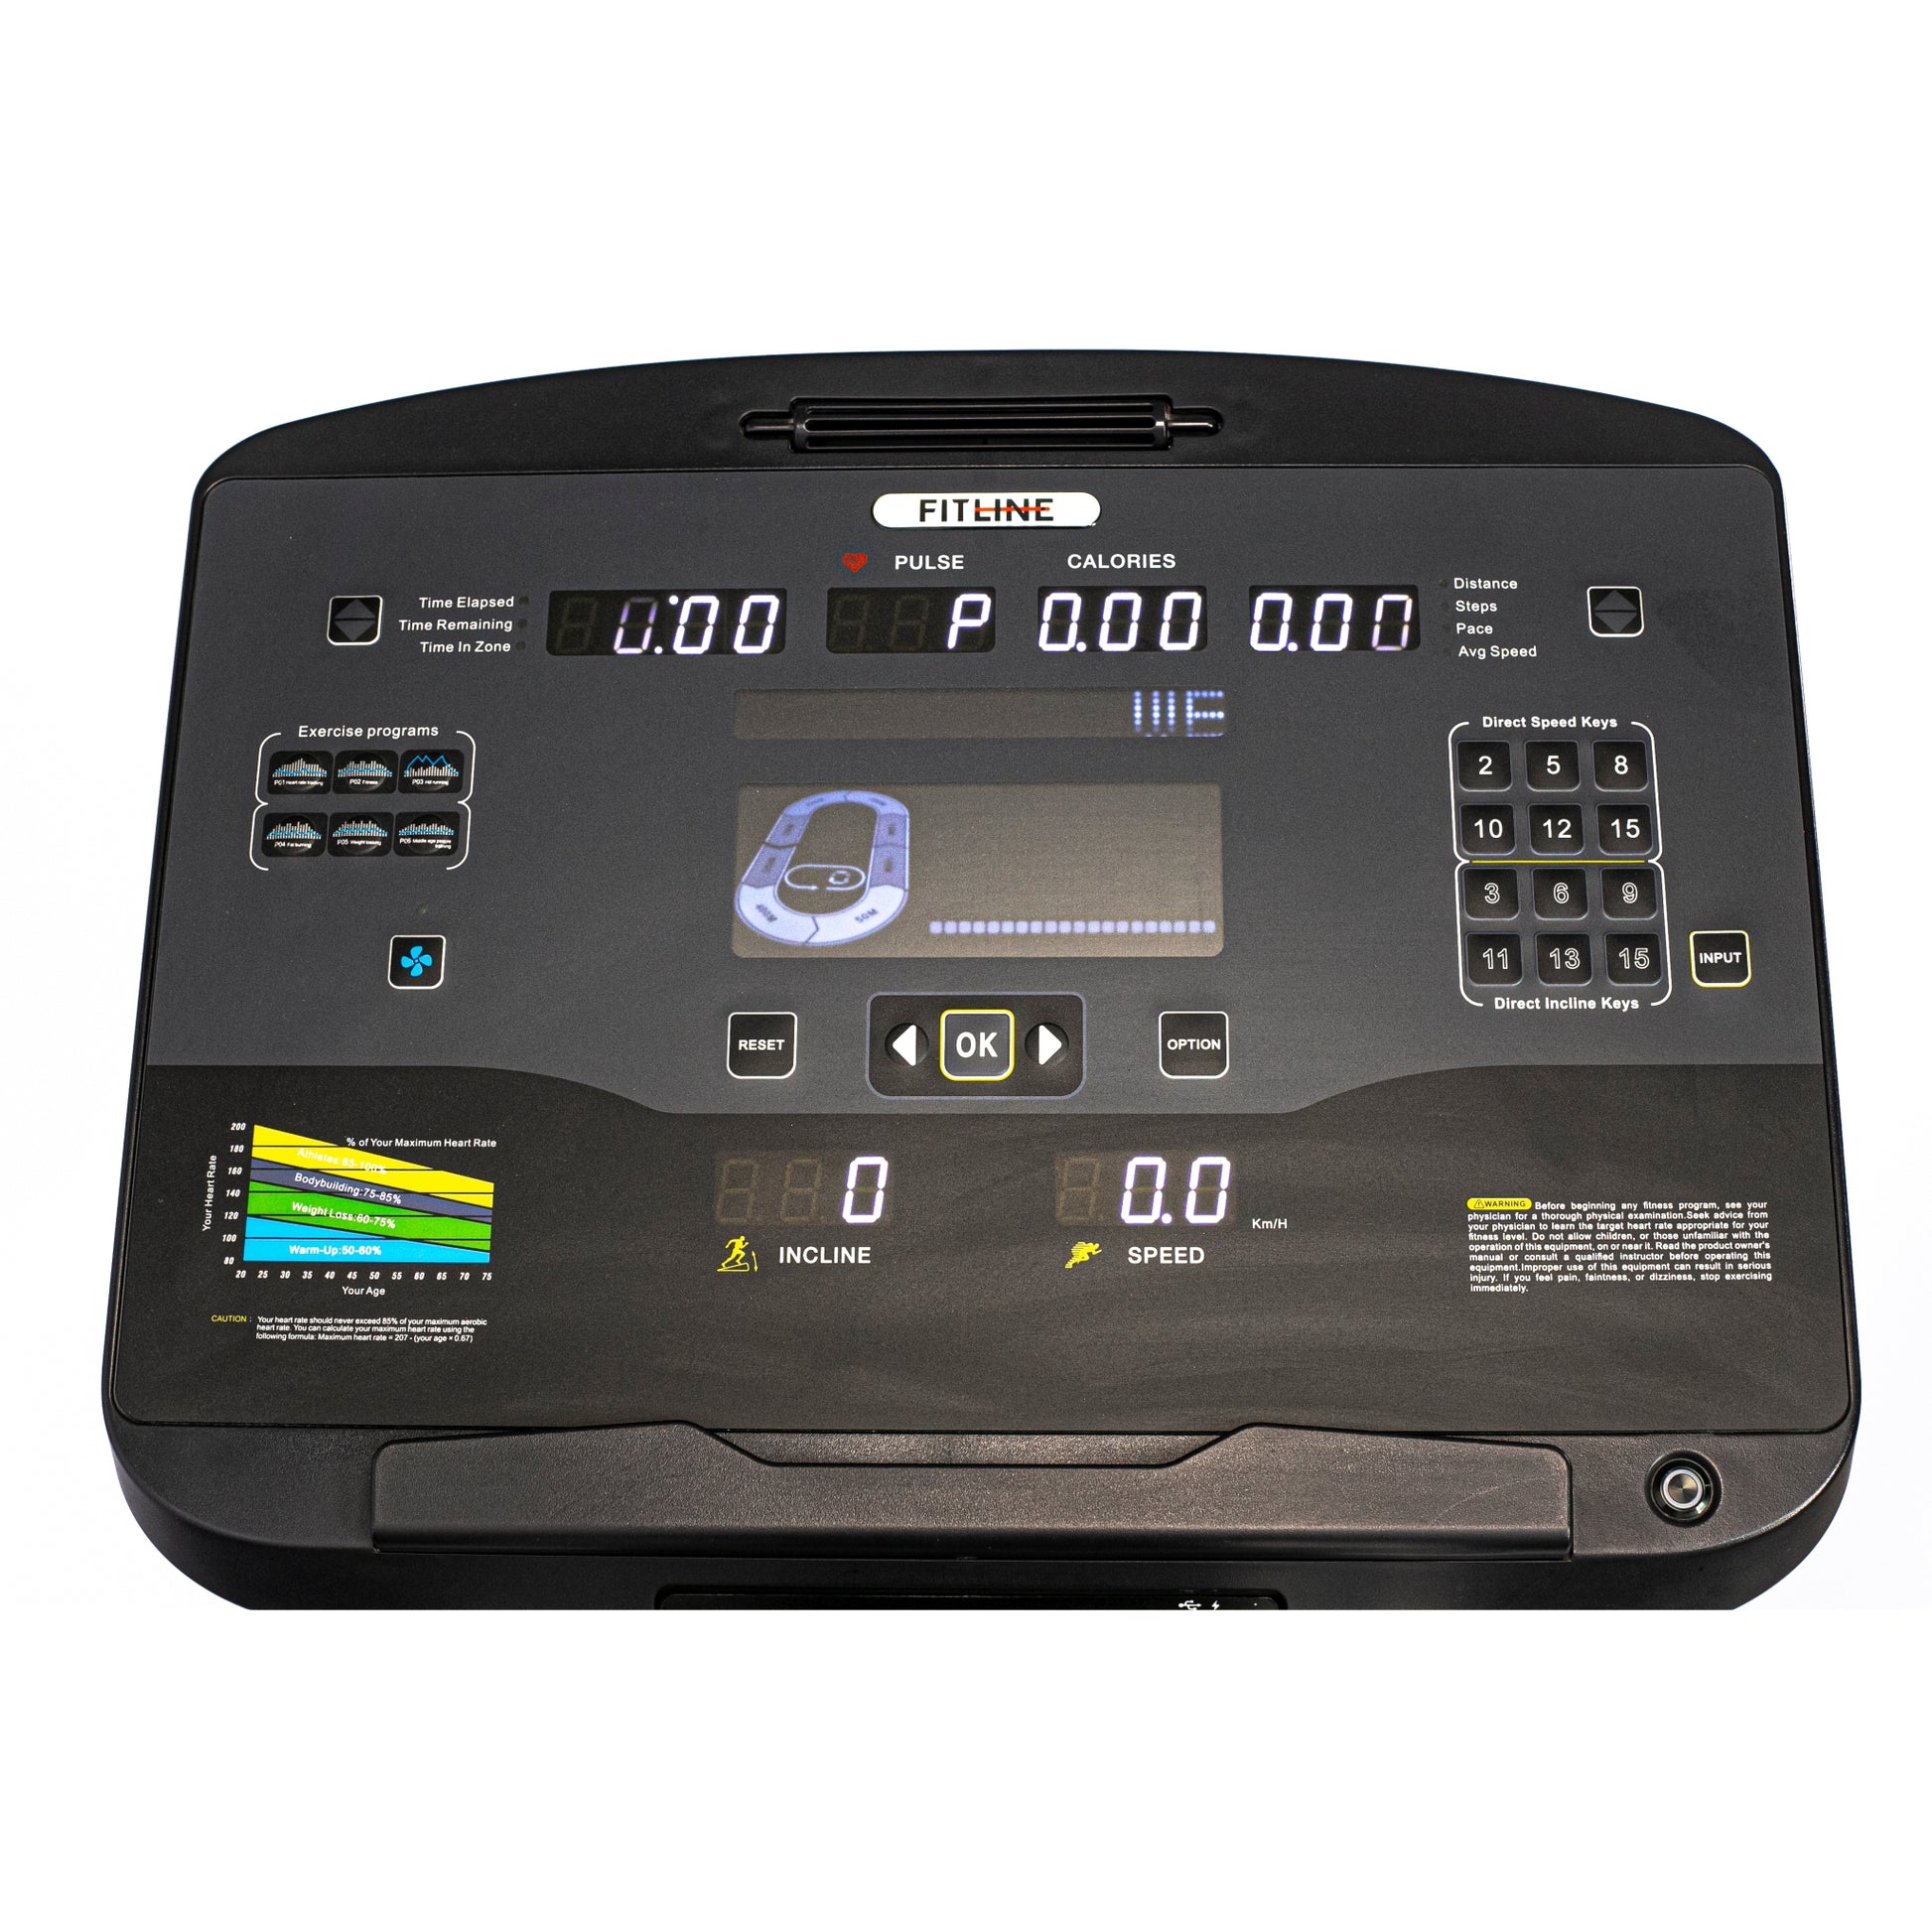 Legacy_Treadmill- Best Cardio Exercise Equipment